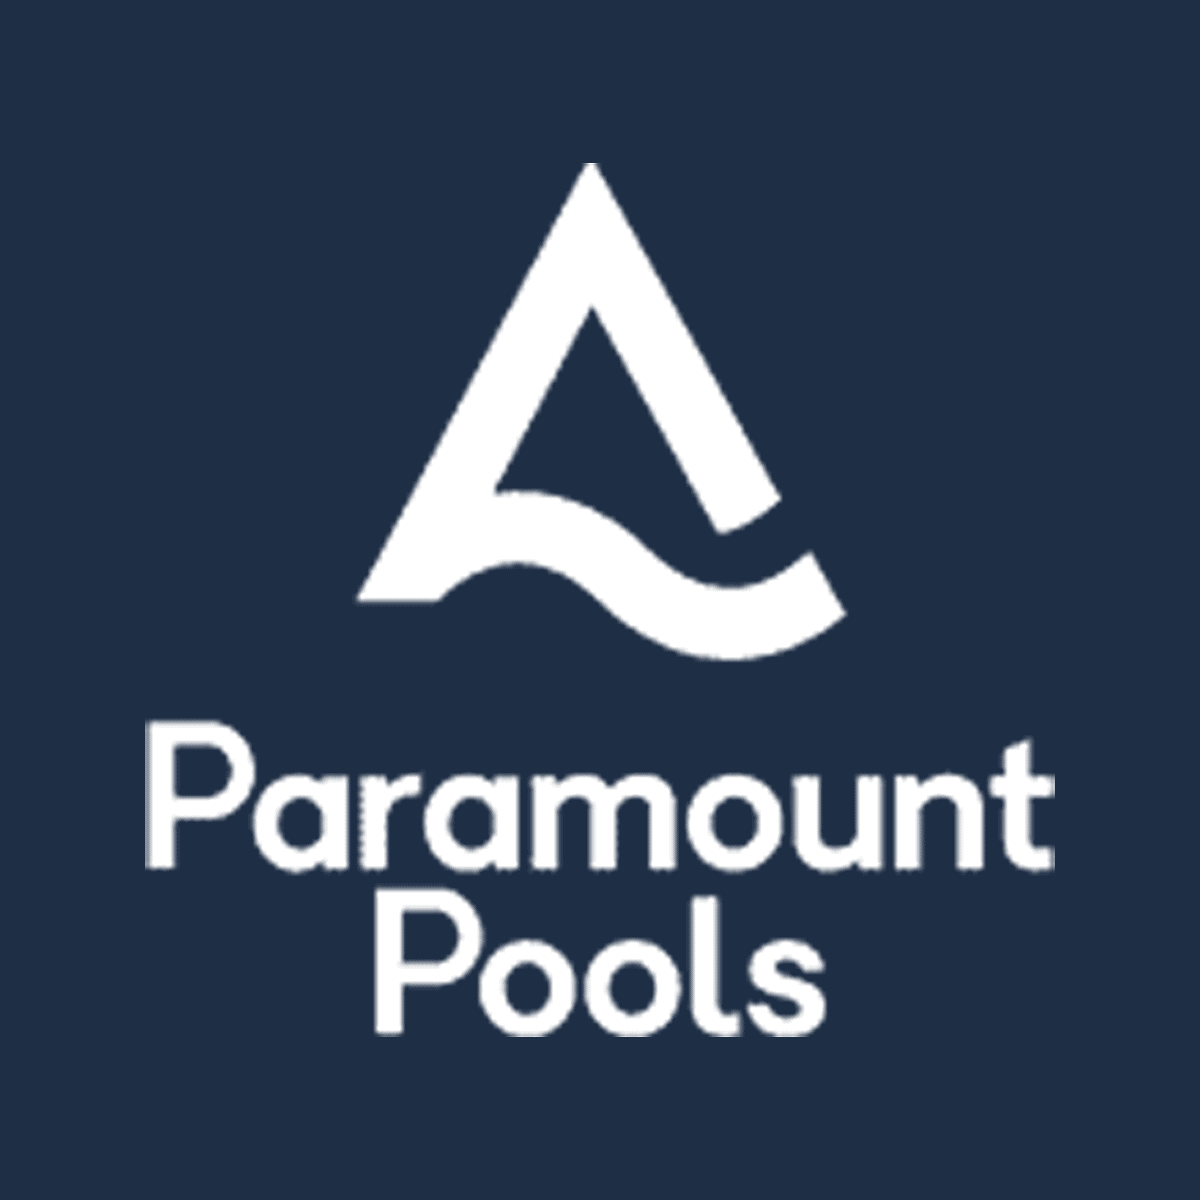 Paramount Pools - Spa Pools & Swimming Pools NZ